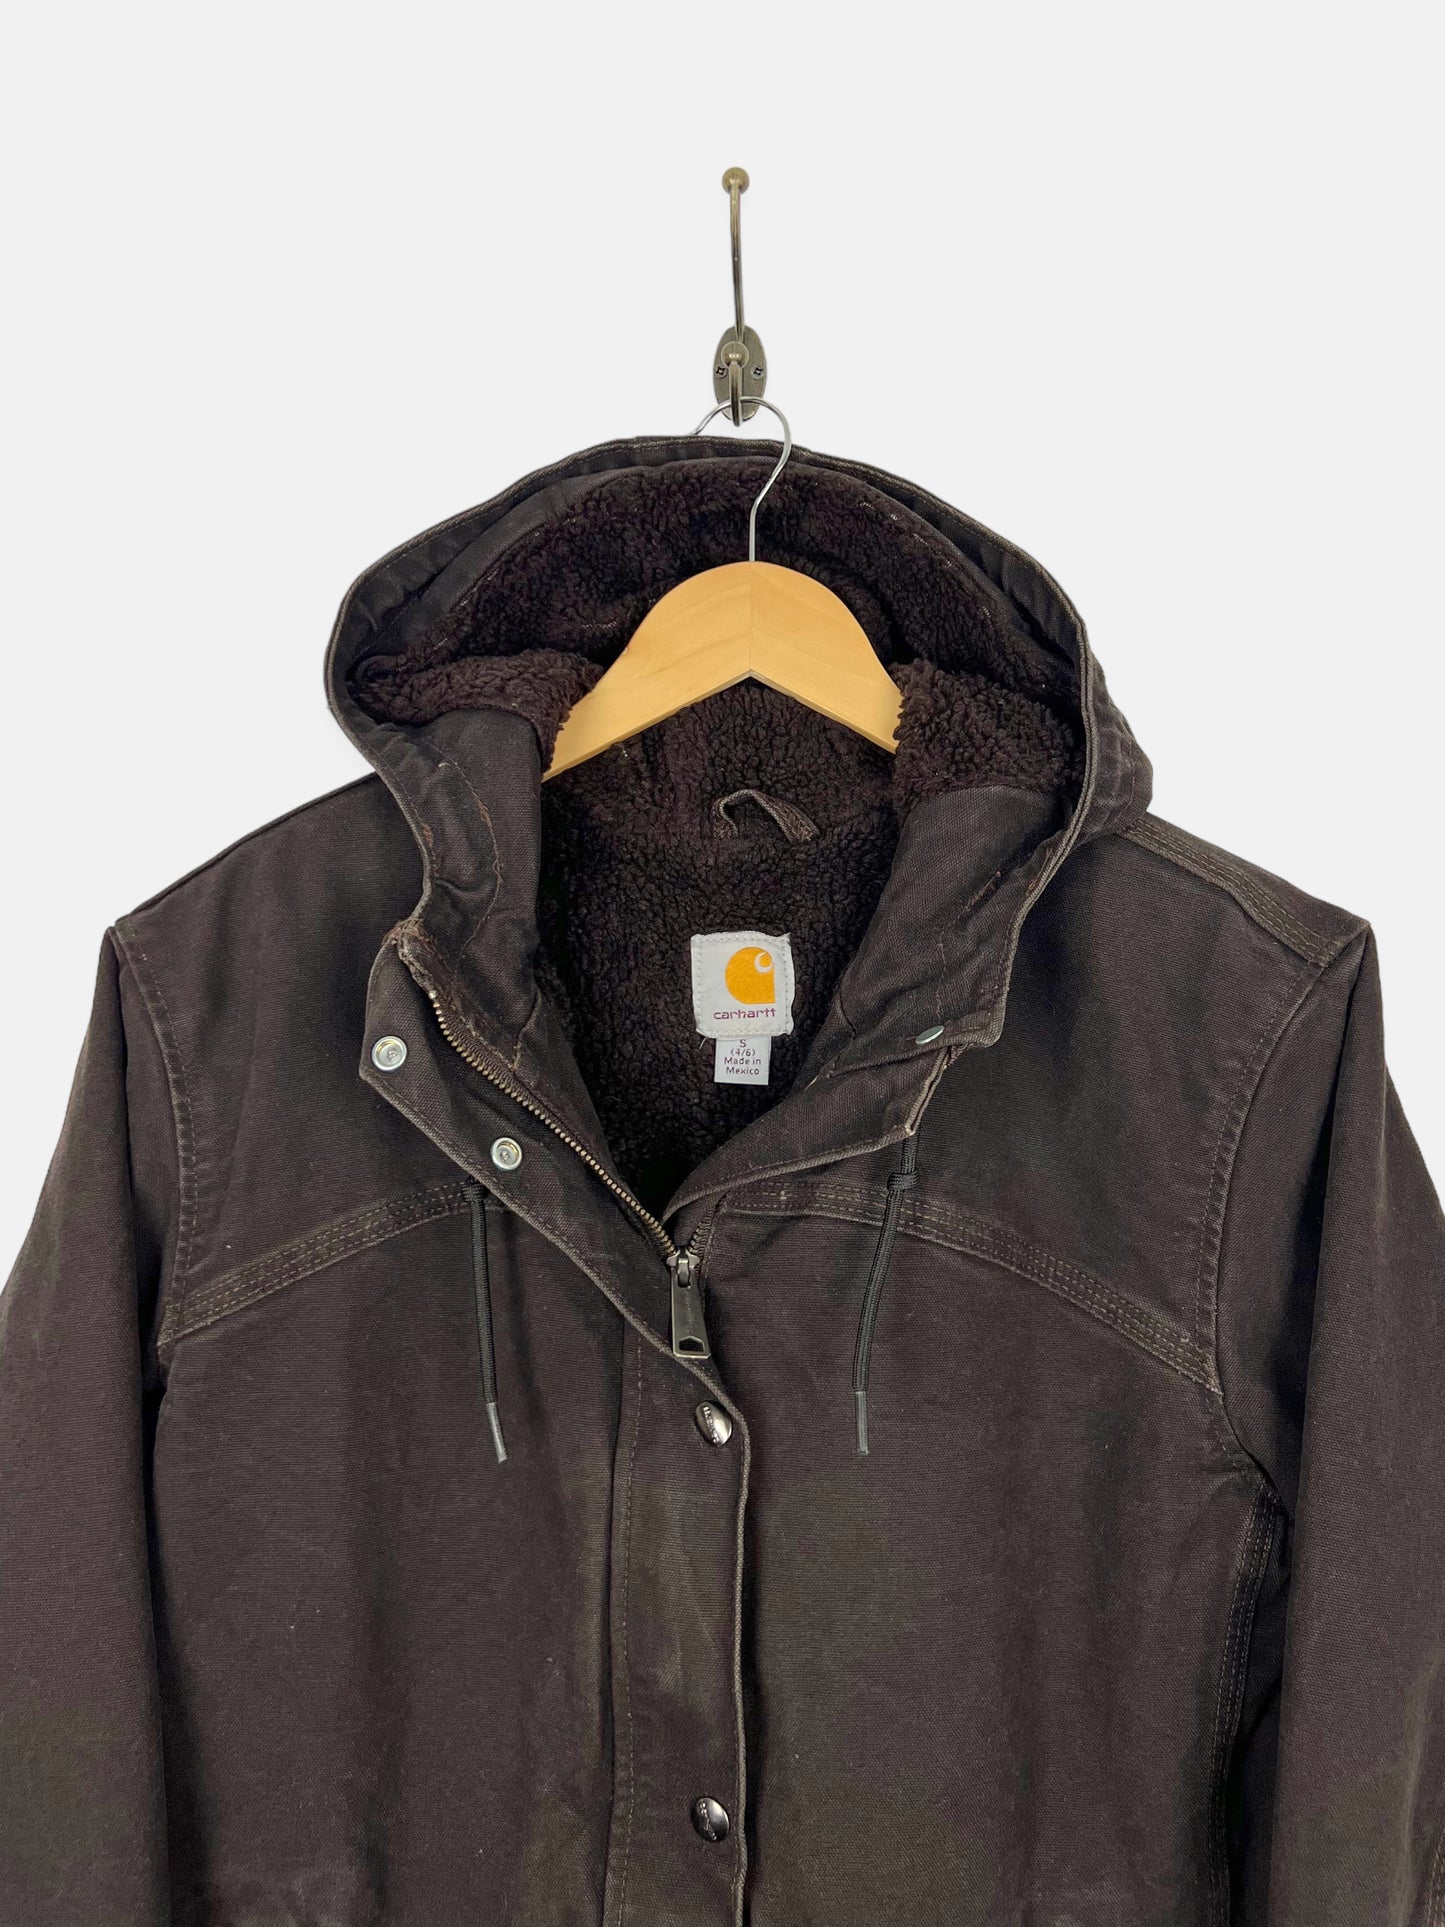 90's Carhartt Heavy Duty Sherpa Lined Vintage Jacket with Hood Size 10-12